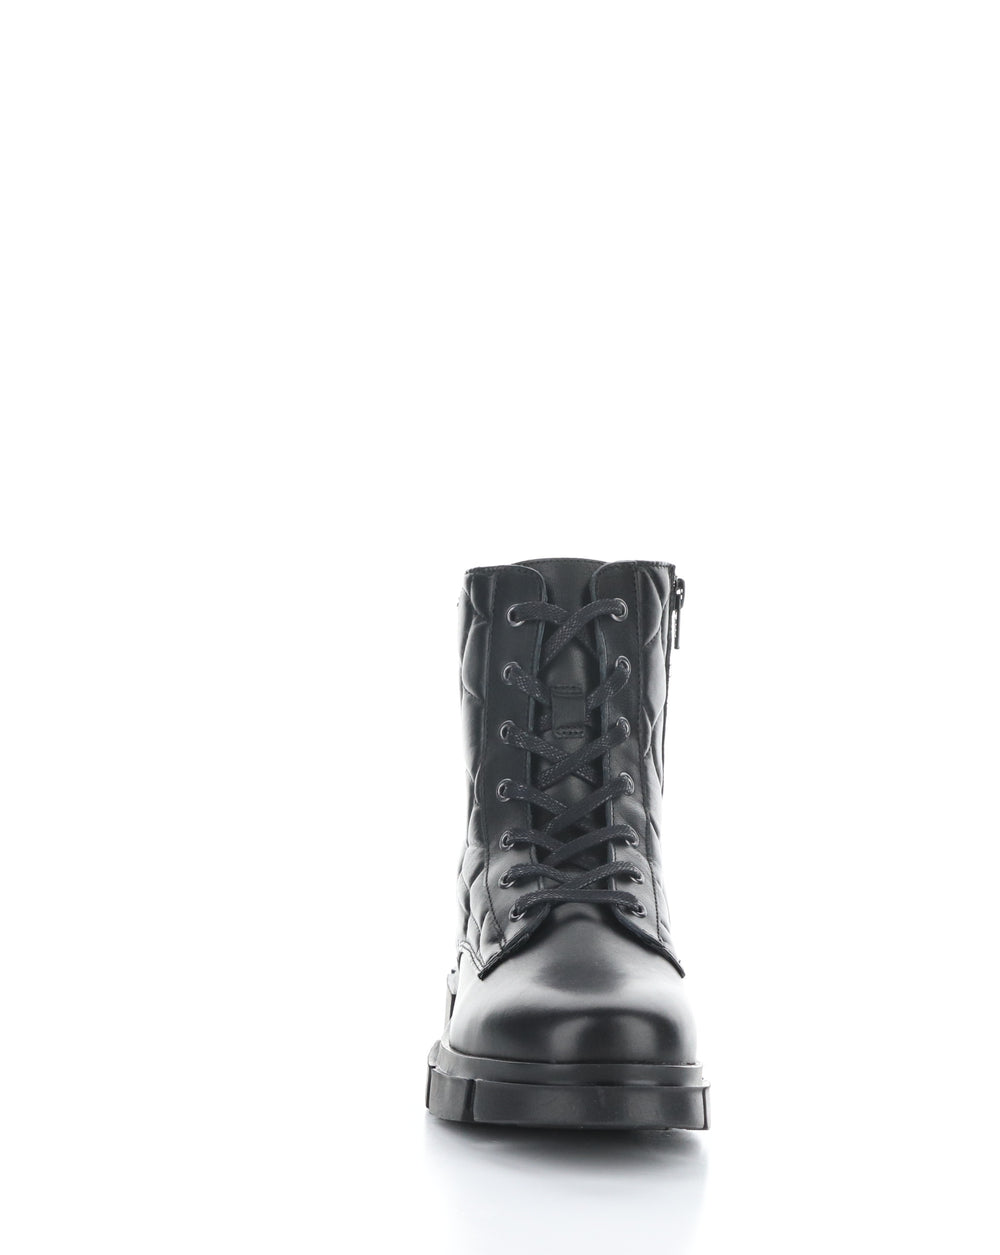 LIBEL BLACK Round Toe Boots